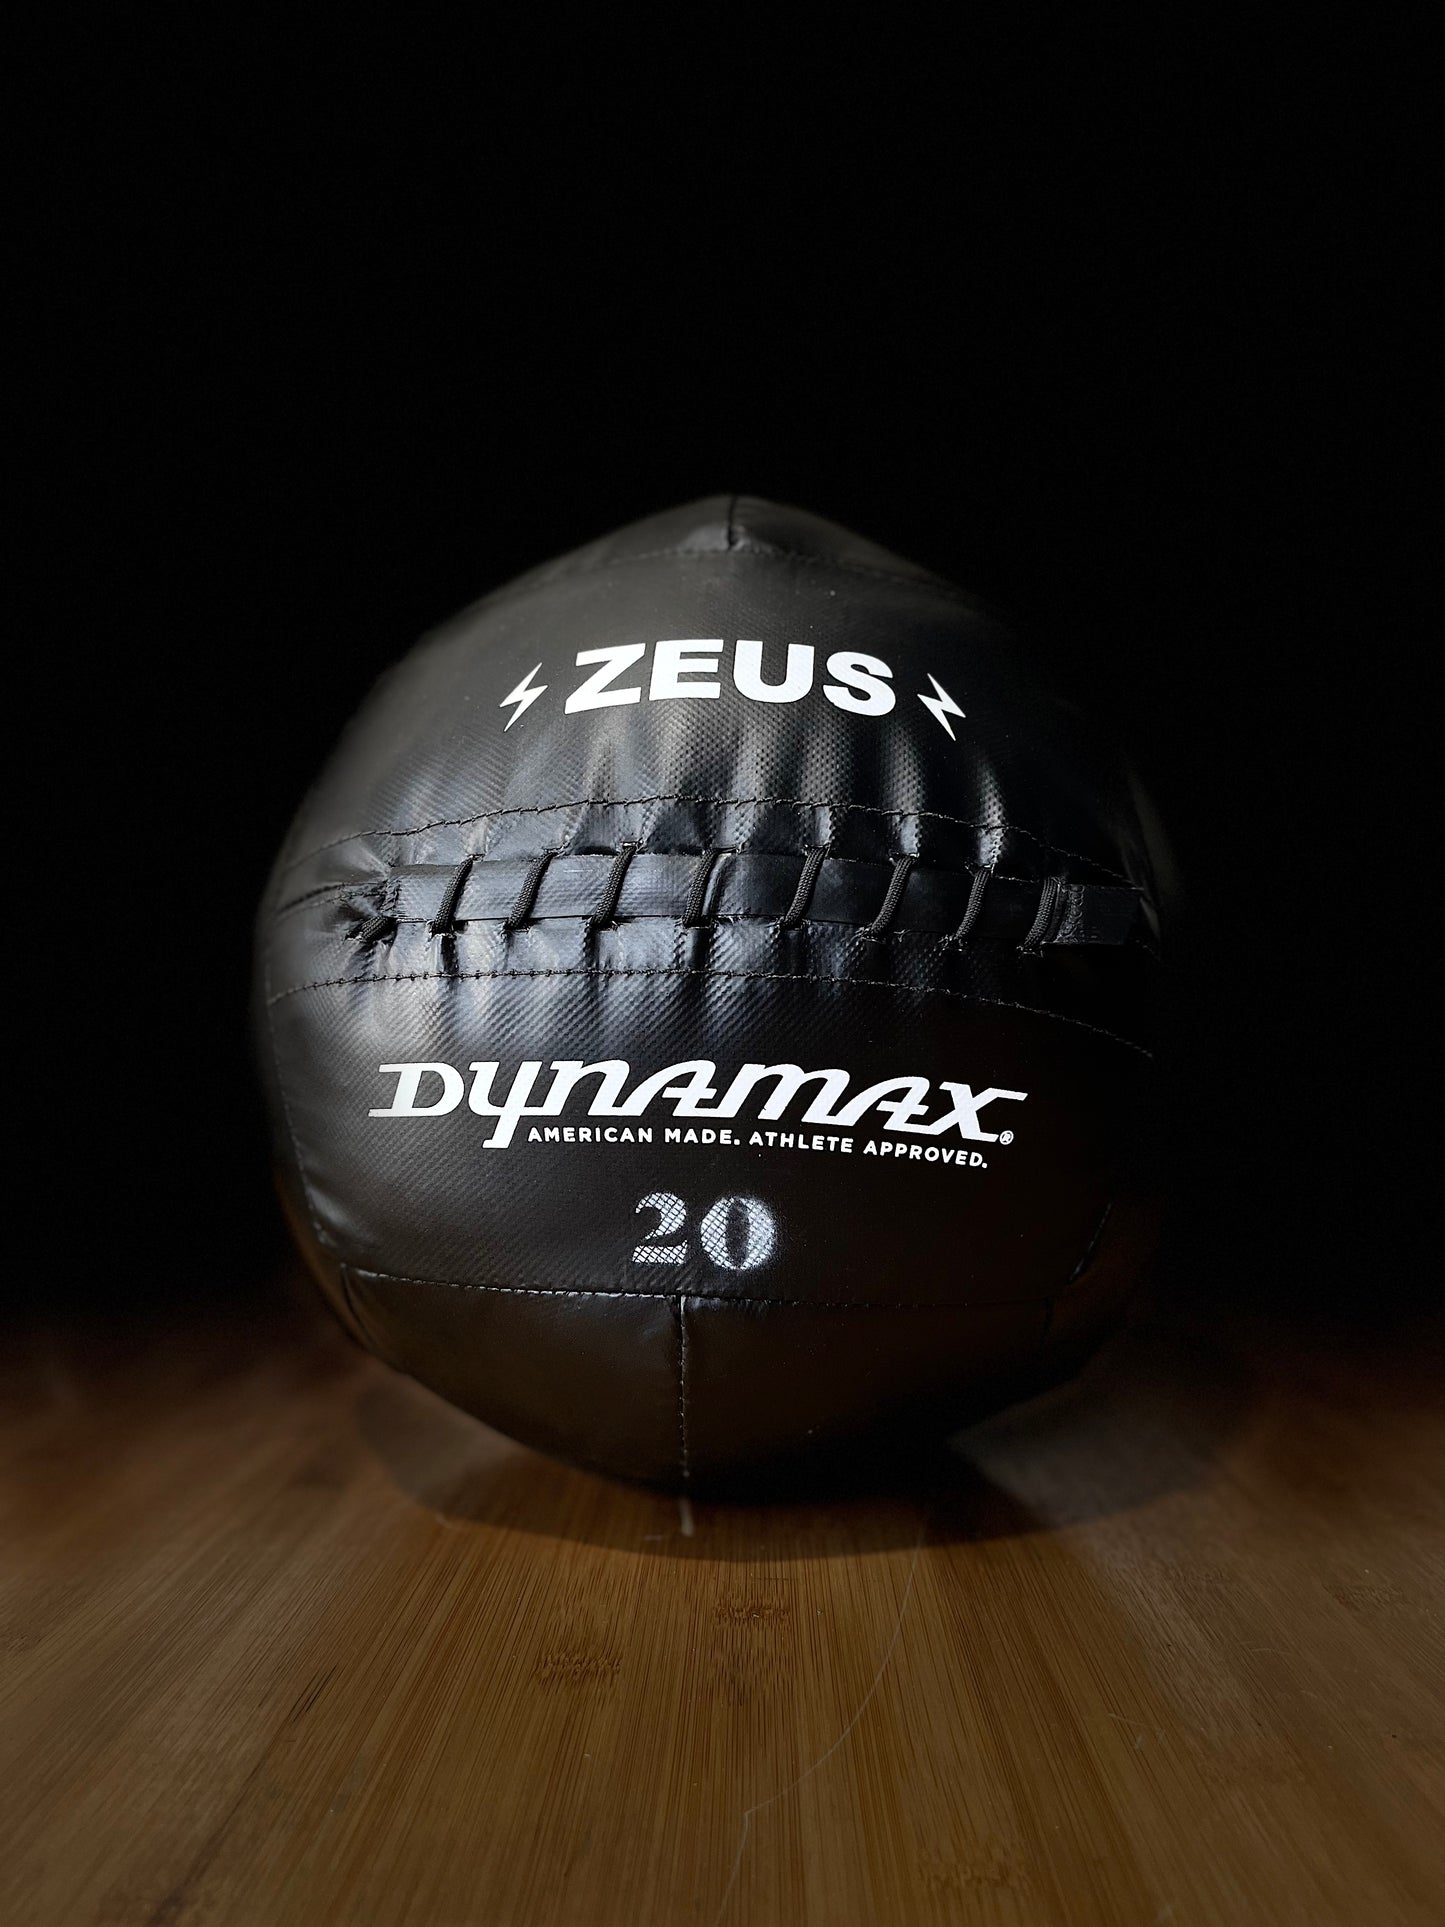 Zeus x Dynamax Medicine Ball